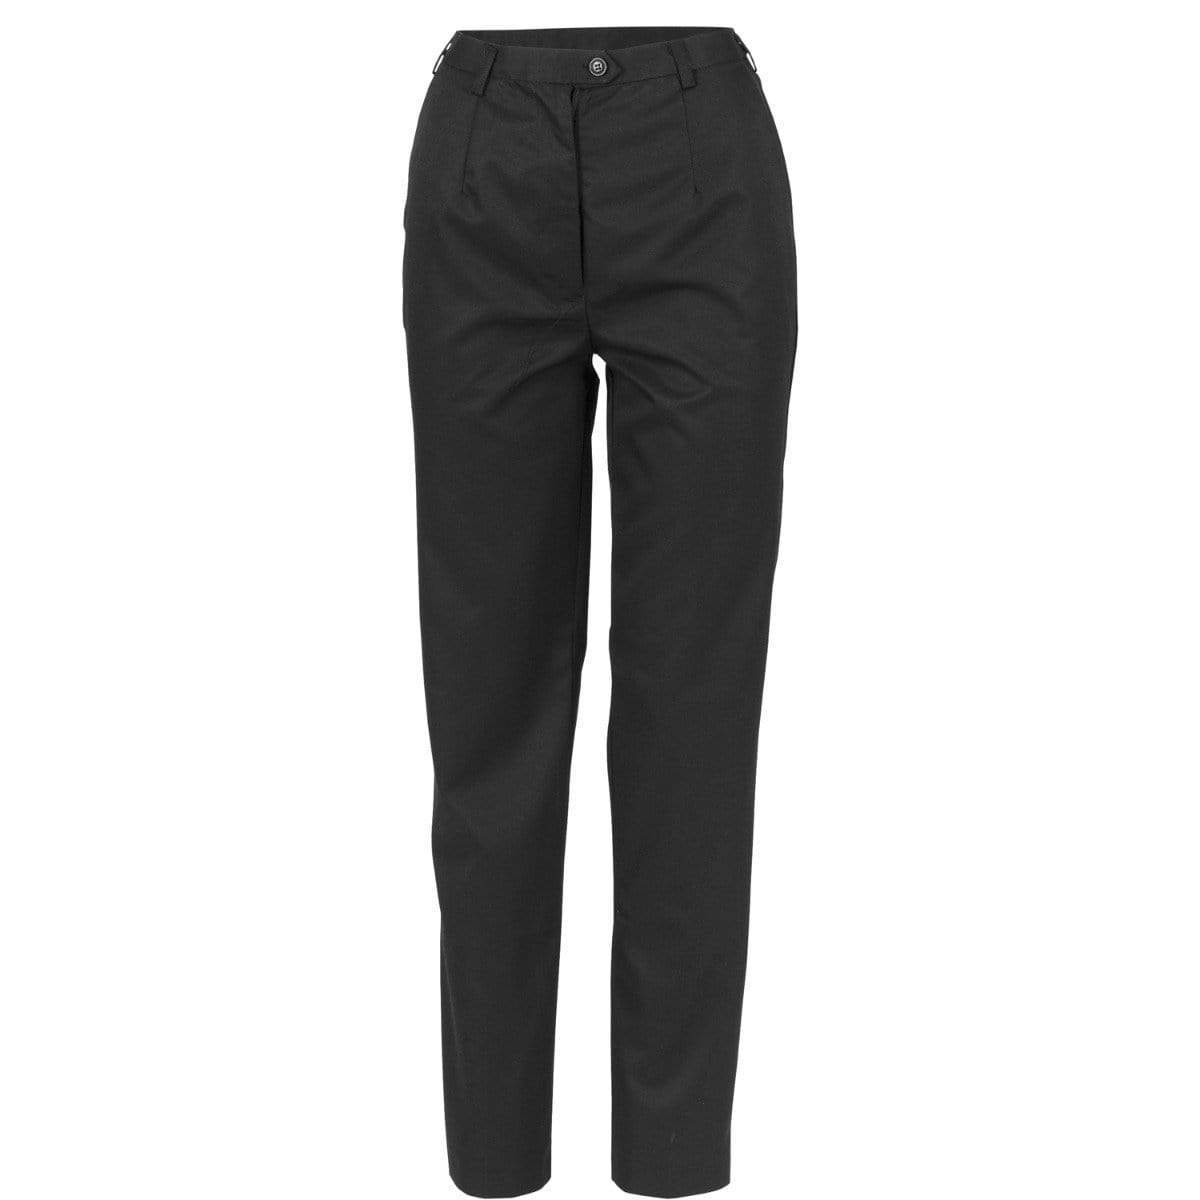 Dnc Workwear Ladies Flat Front Pants - 4552 Work Wear DNC Workwear Navy 6 